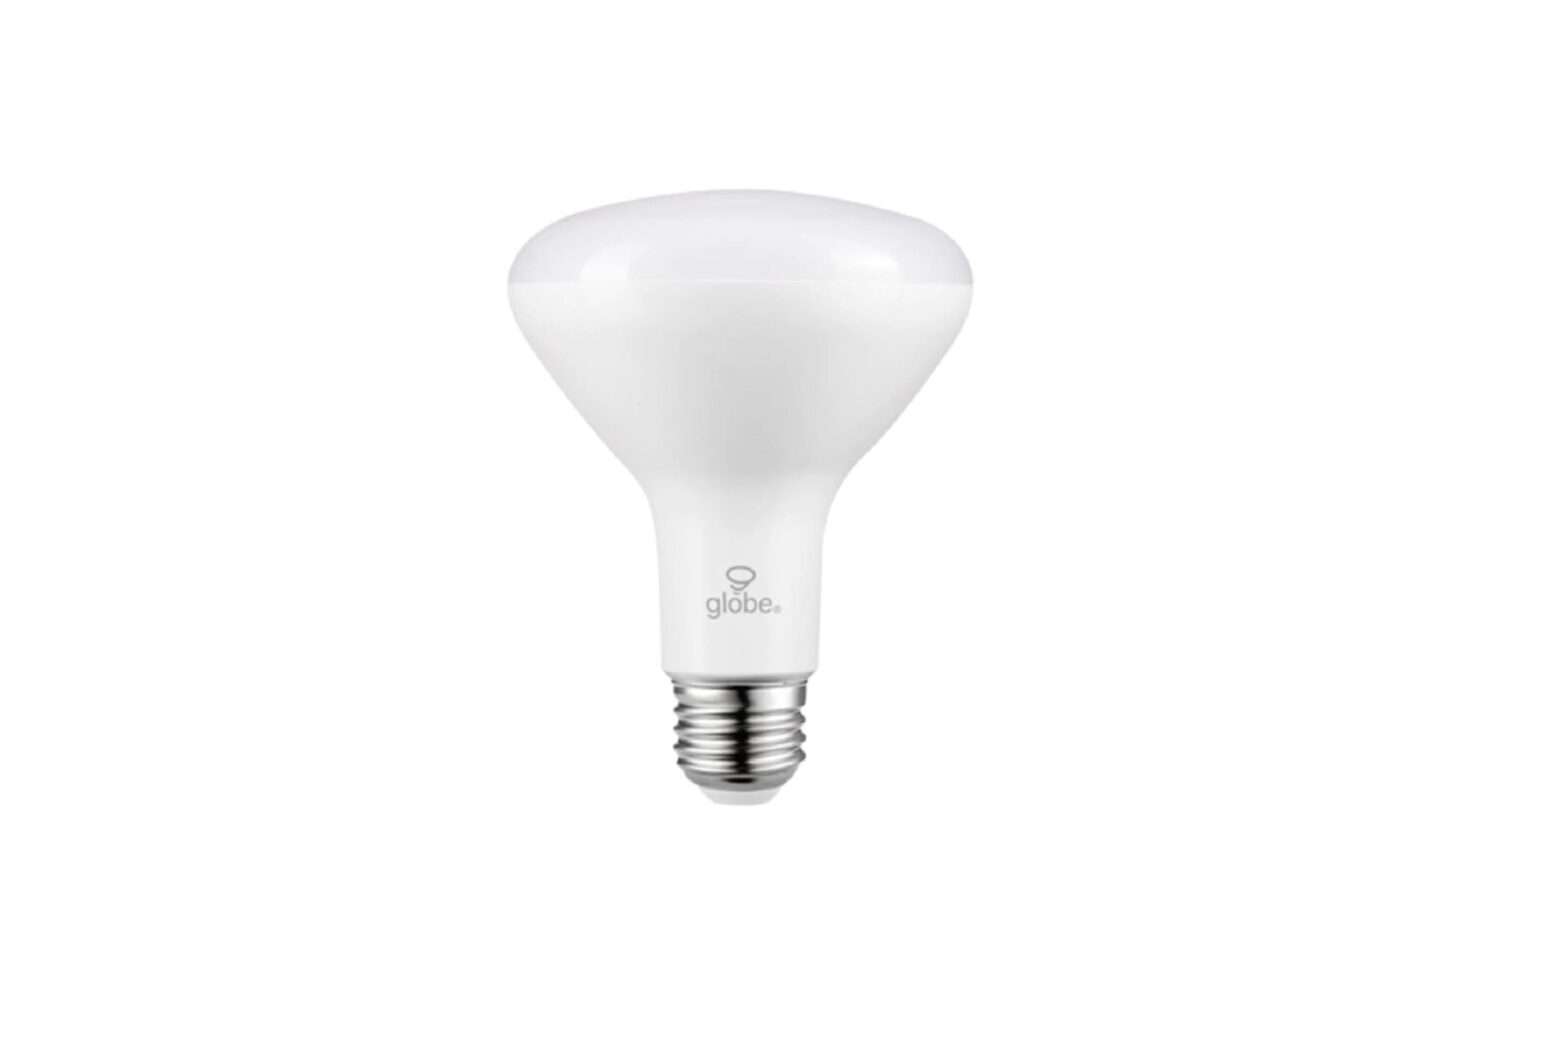 globe electric 50035 Smart Bulb User Guide